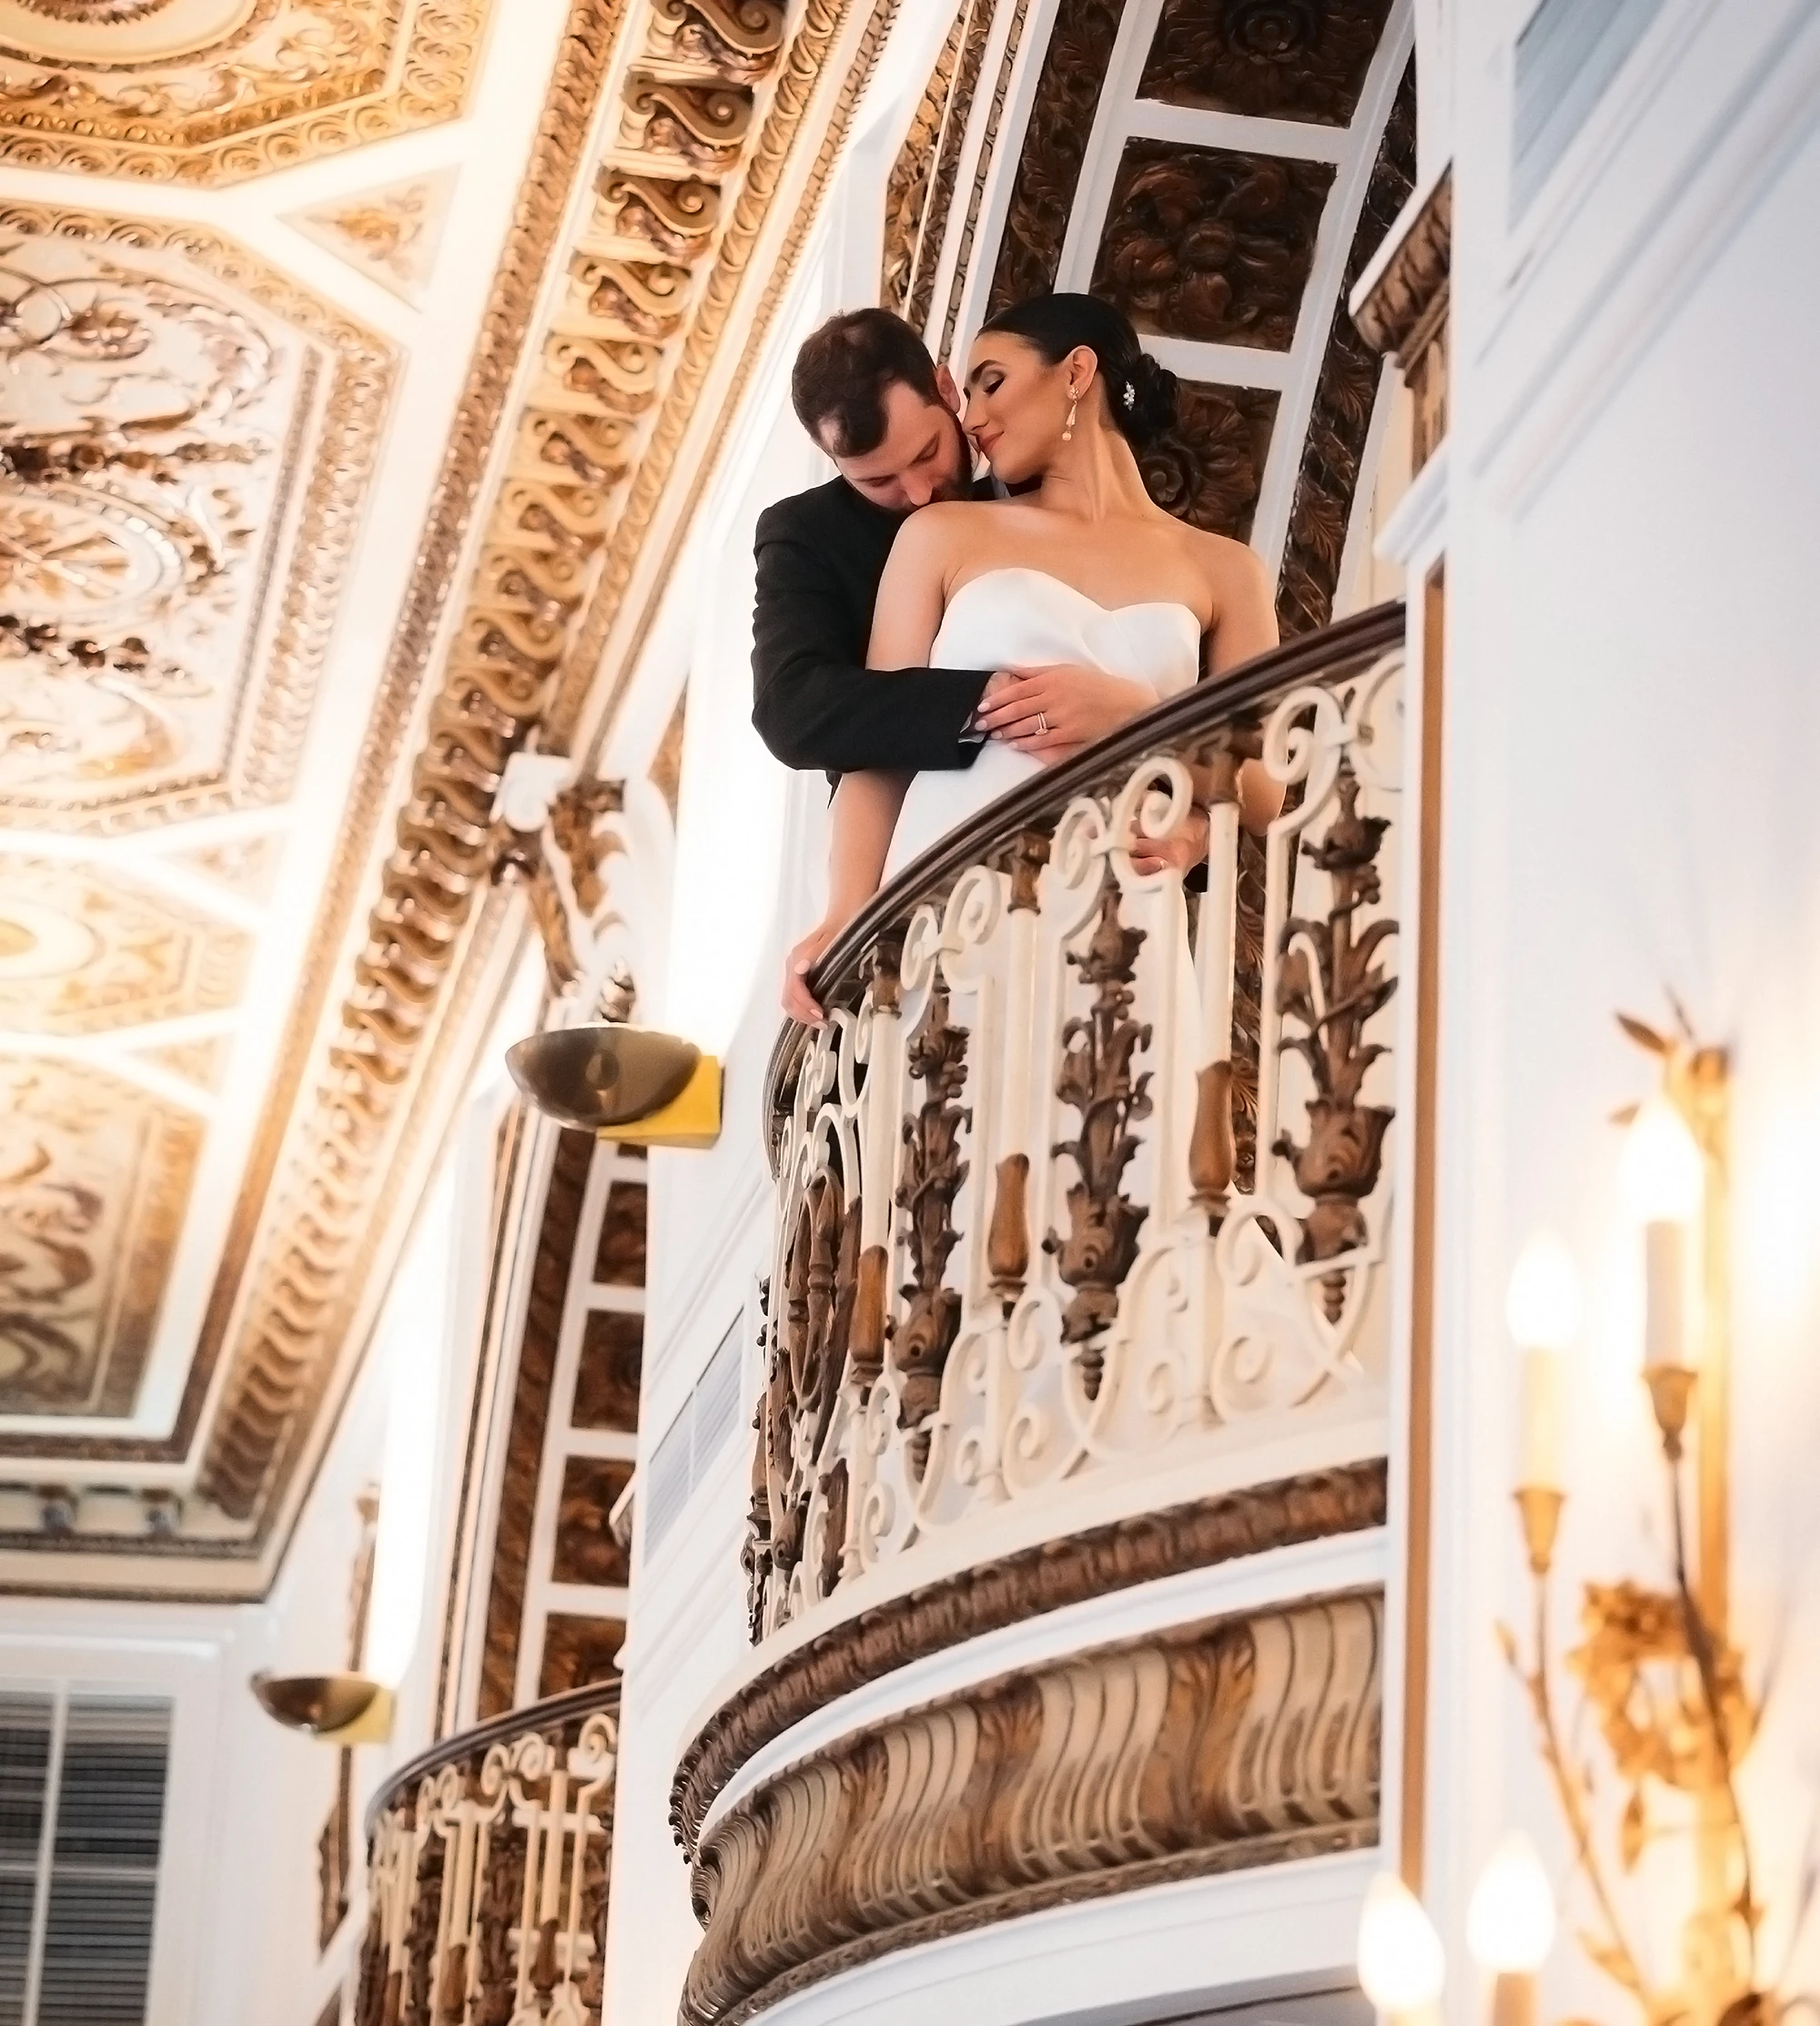 katrina and sean embracing on an ornate balcony